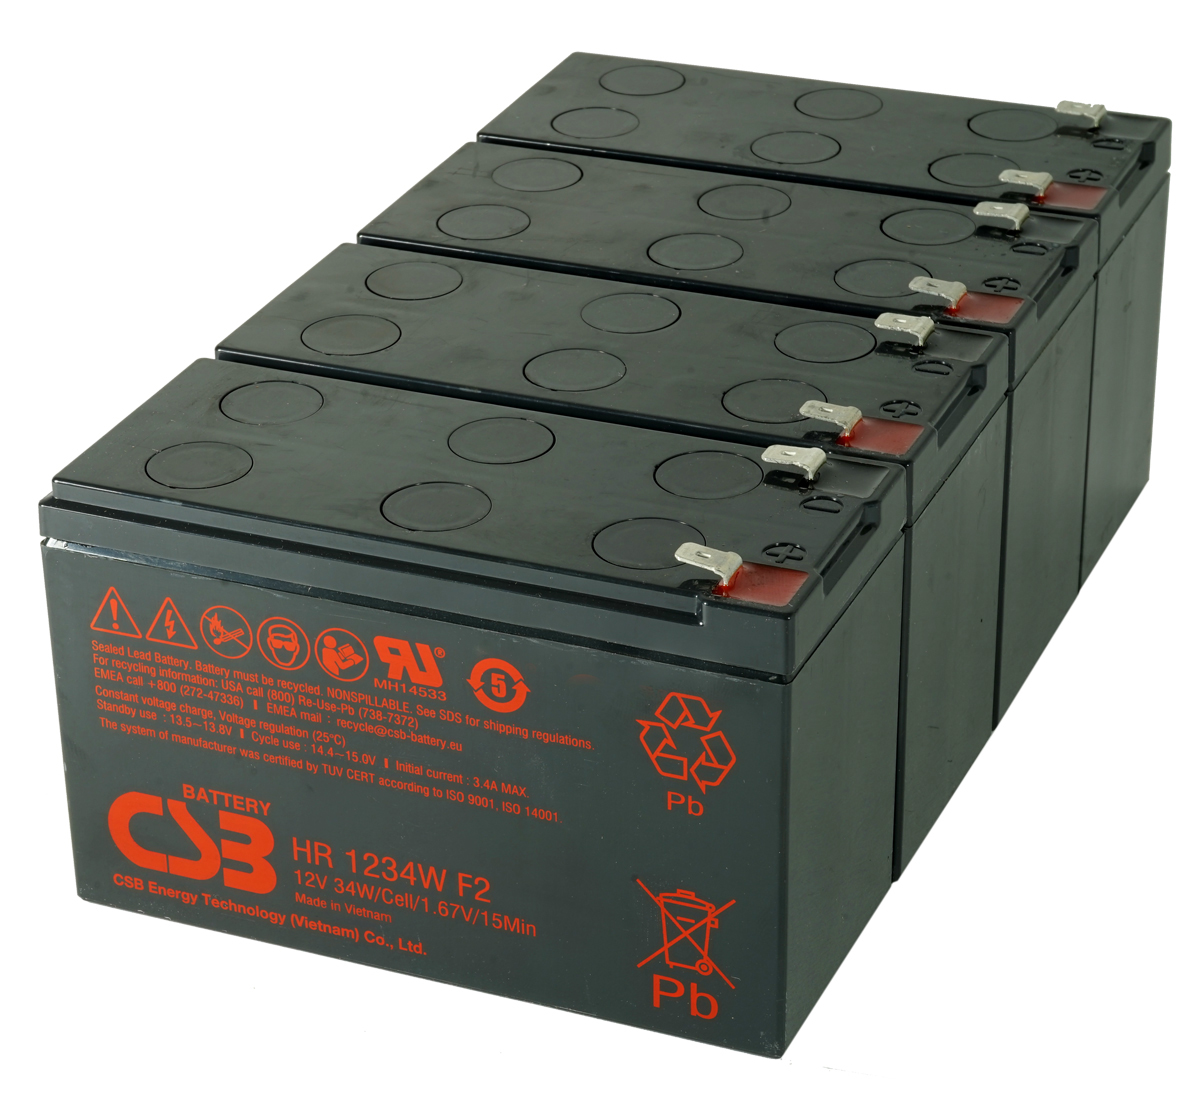 MDS159 UPS Battery Kit - Replaces APC RBC159